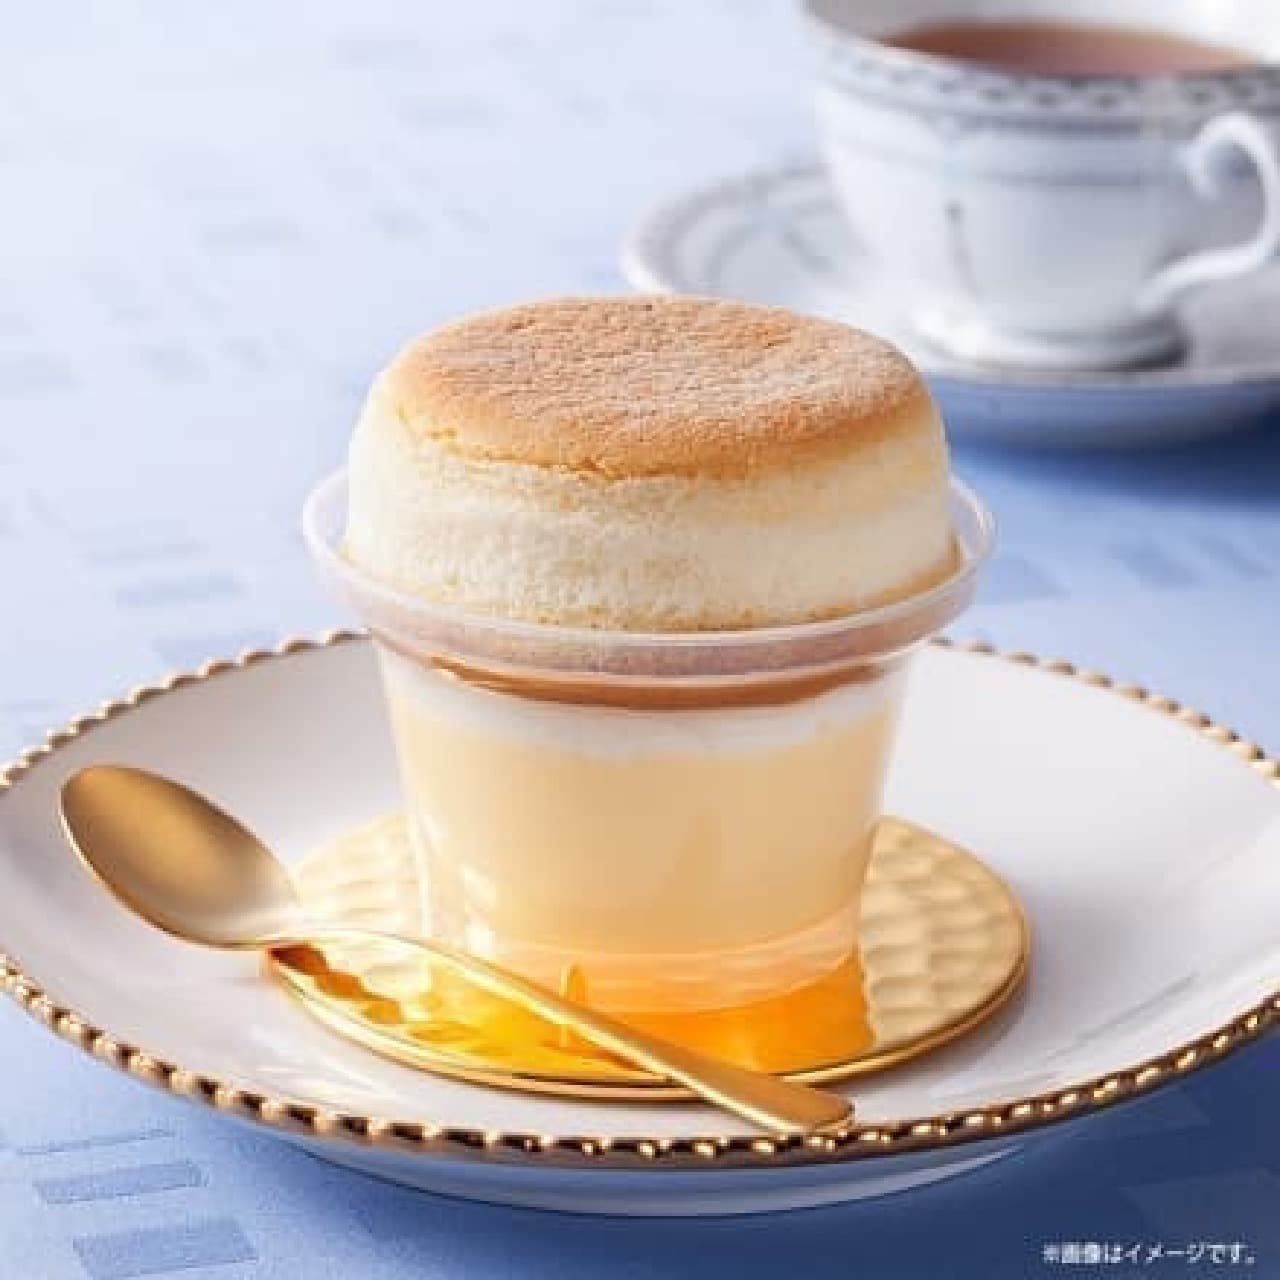 FamilyMart's most popular sweet "Souffle Pudding"